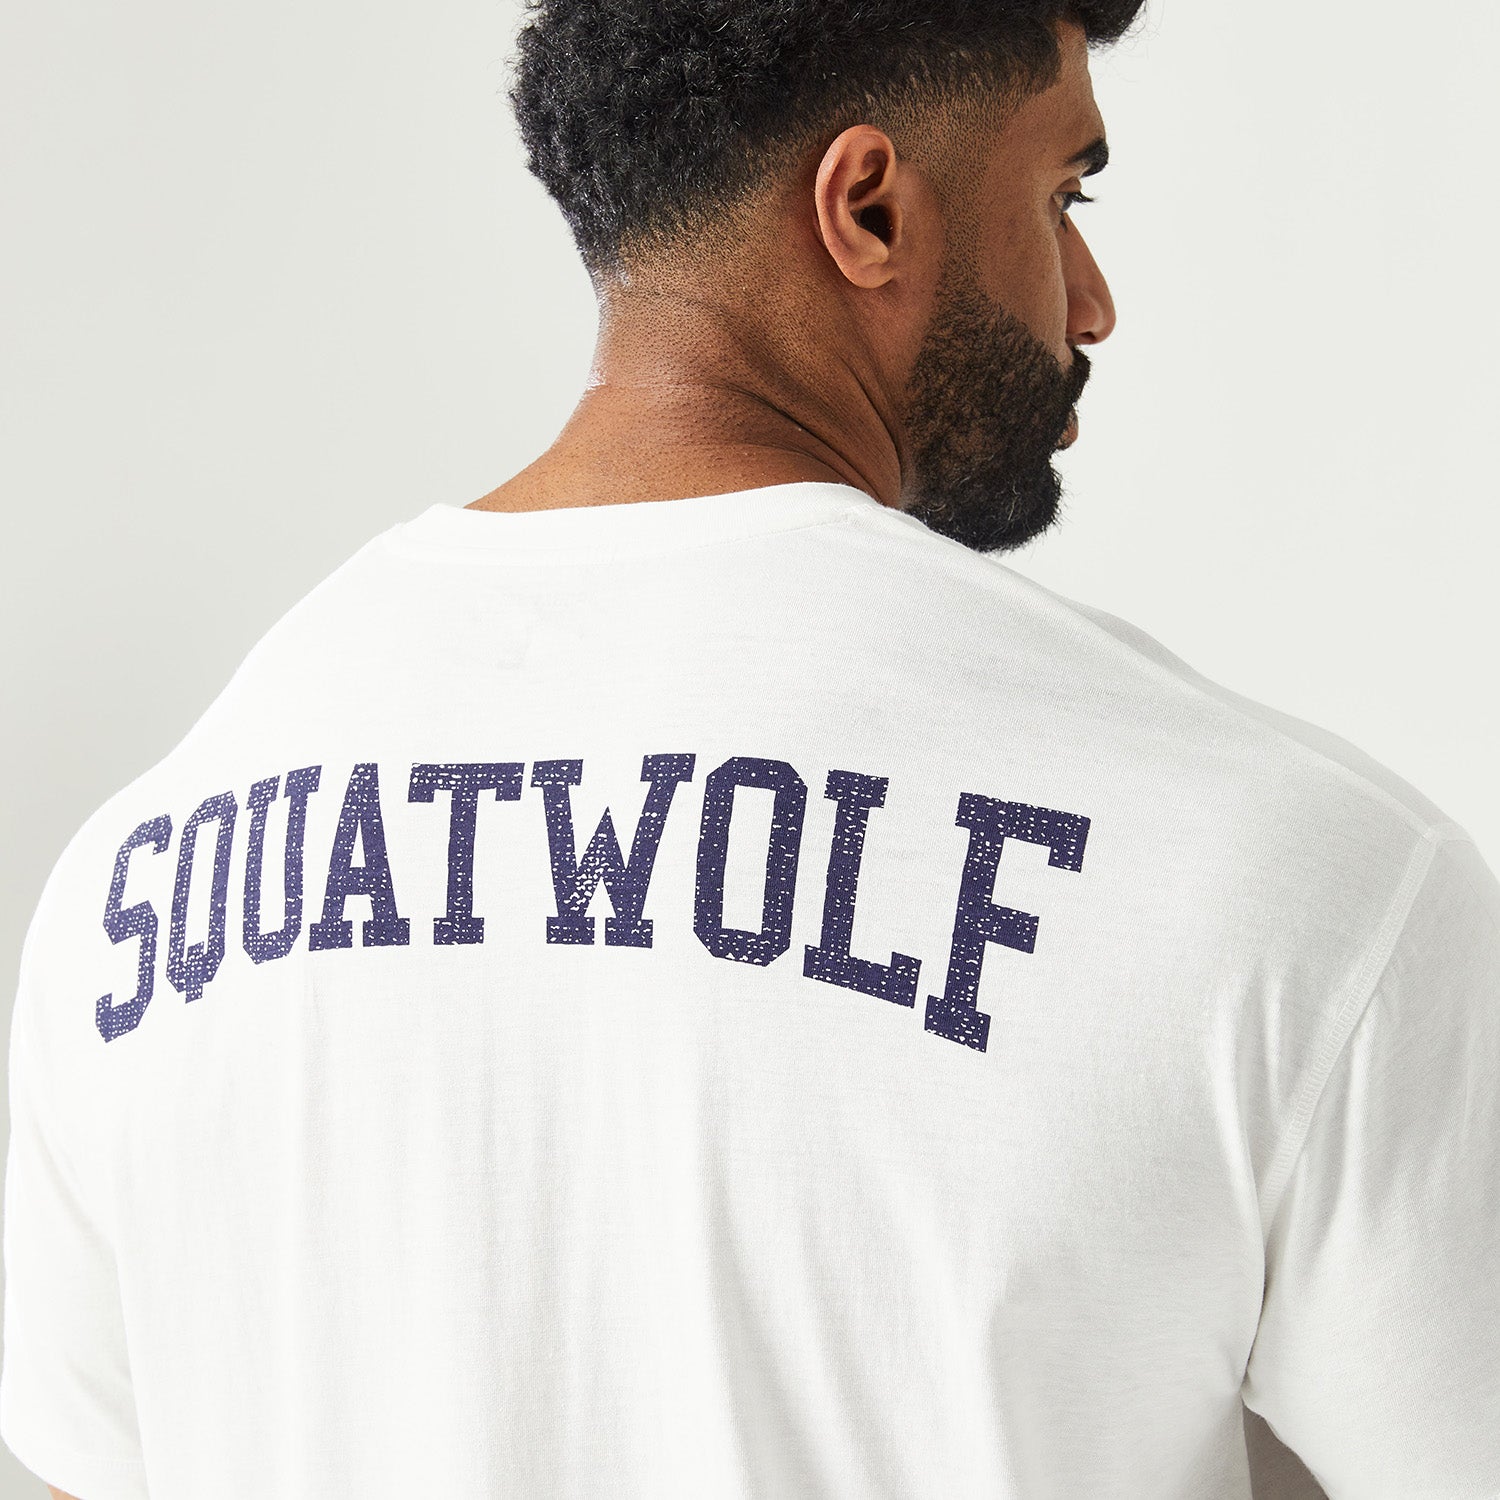 squatwolf-gym-wear-golden-era-core-oversized-tee-white-workout-shirts-for-men